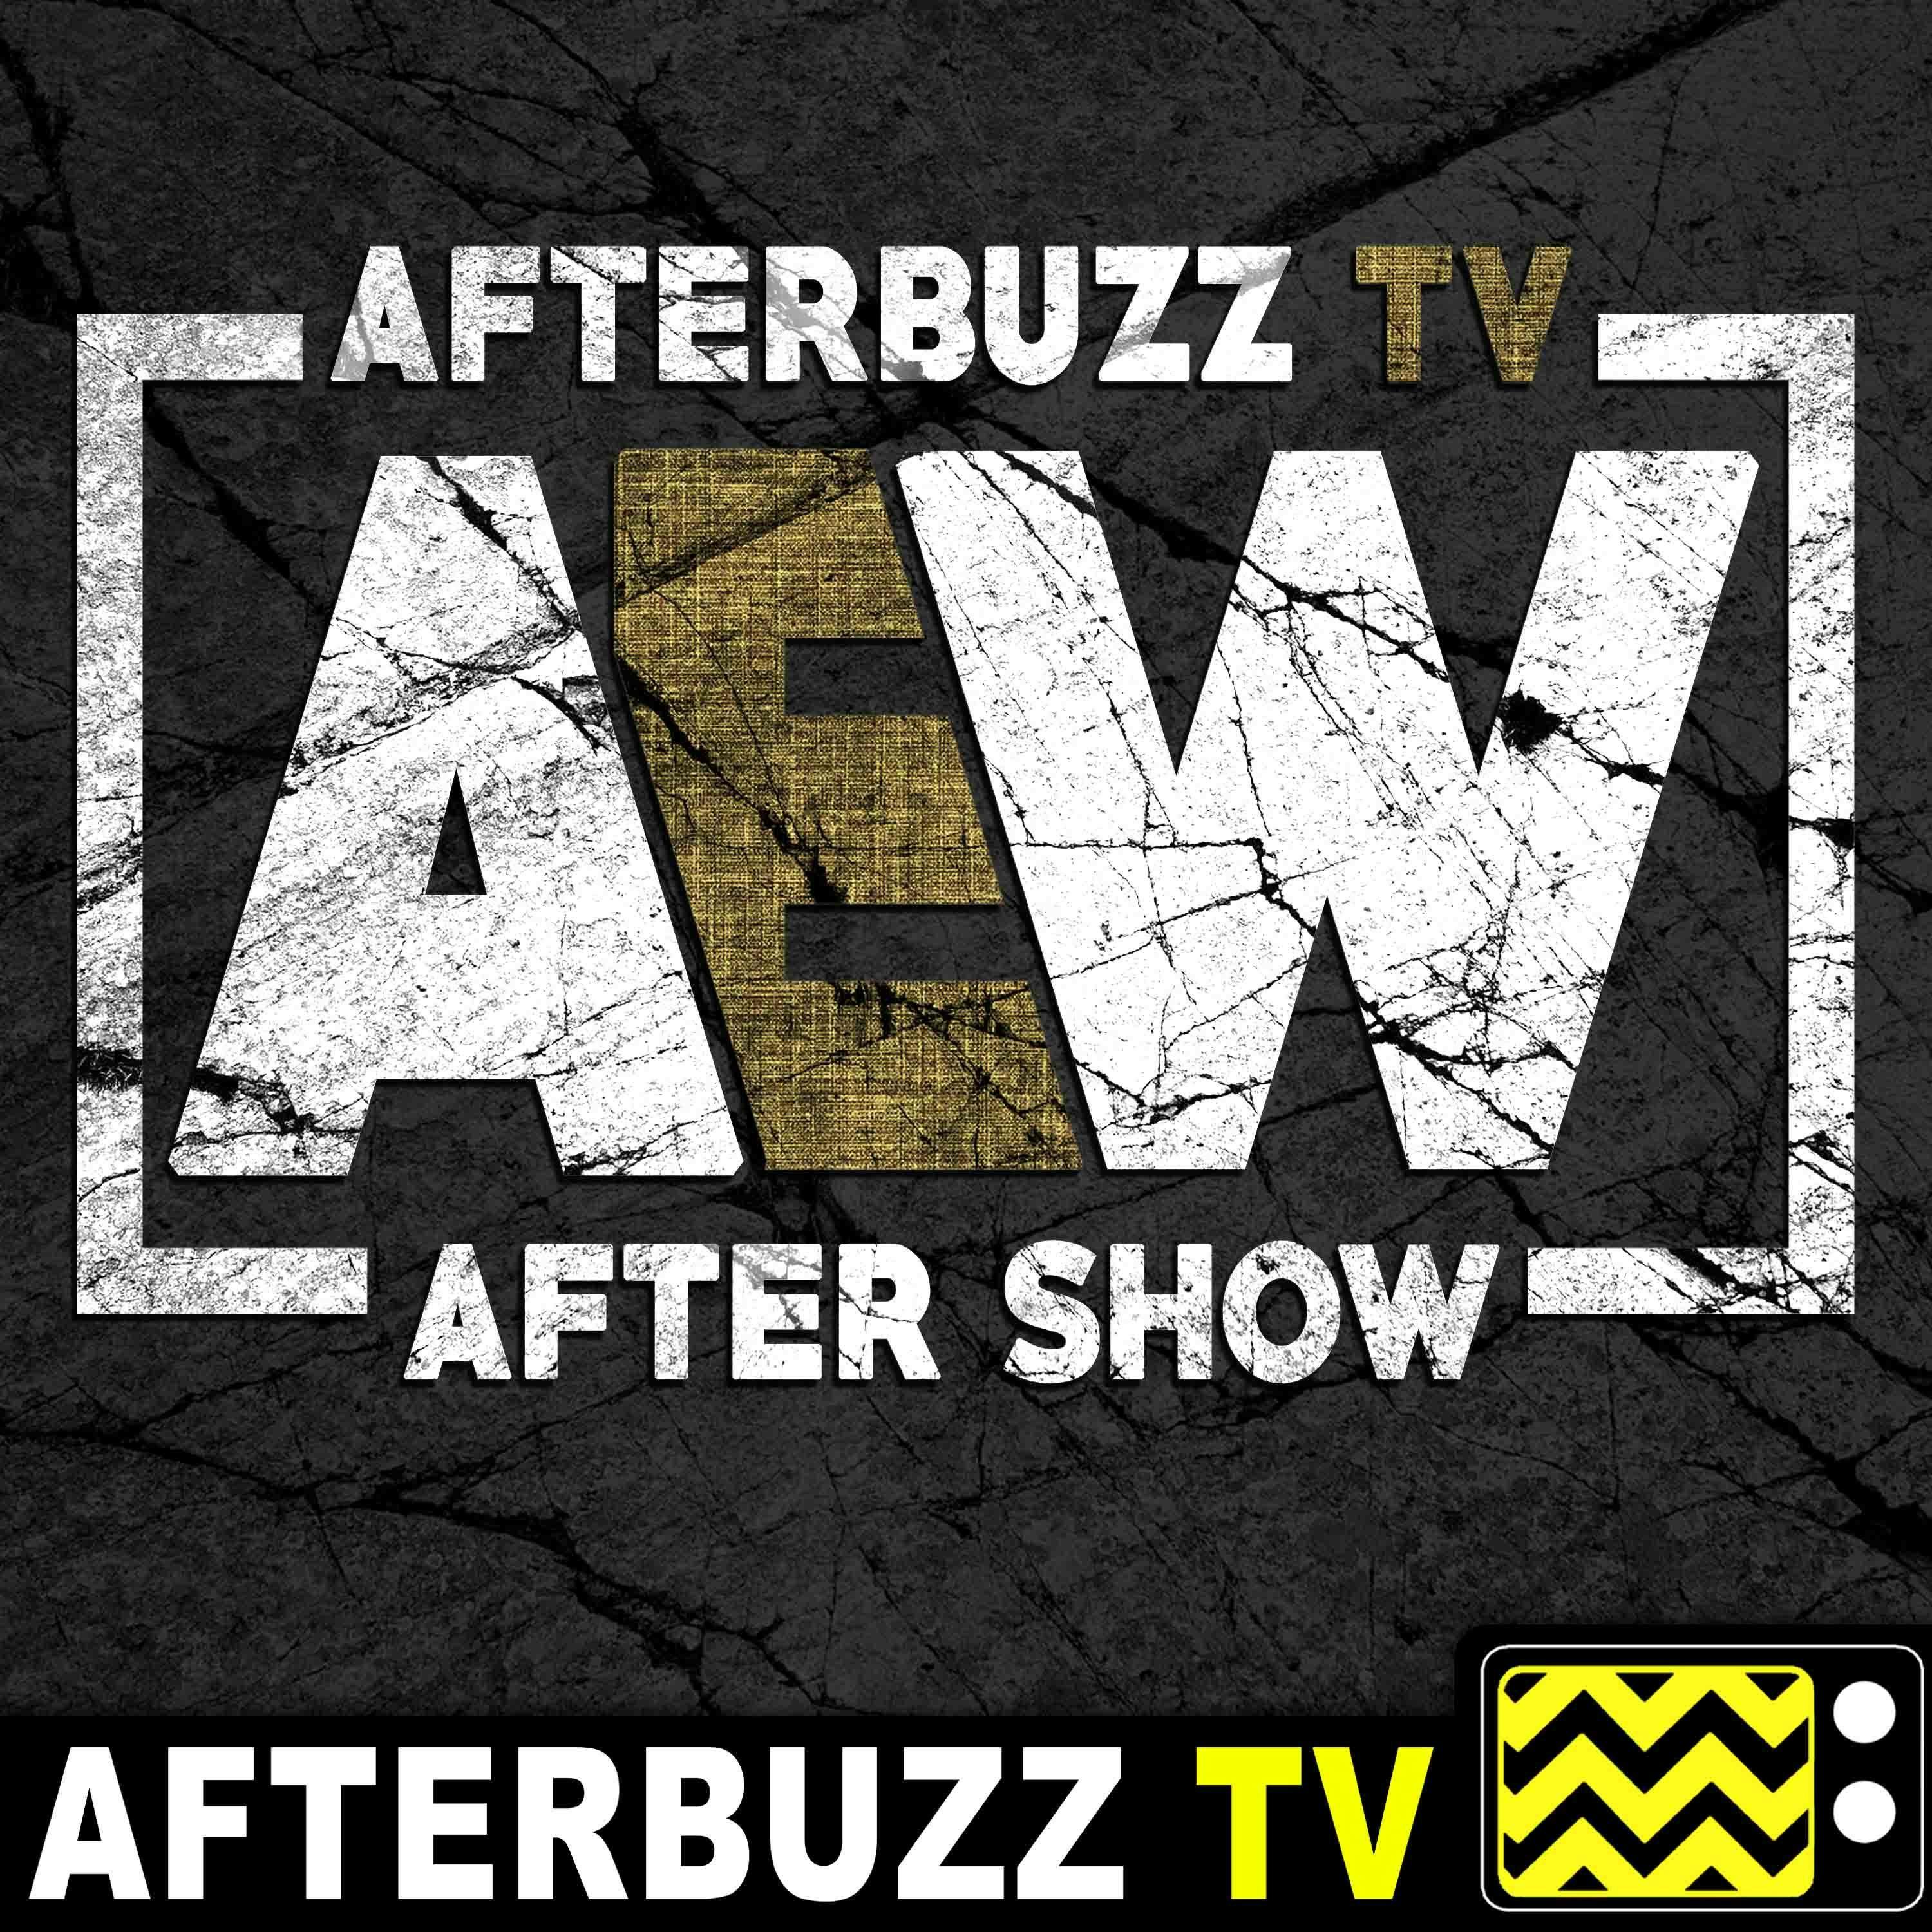 AEW Dynamite is BROKEN - All Elite Wrestling Recap & Review